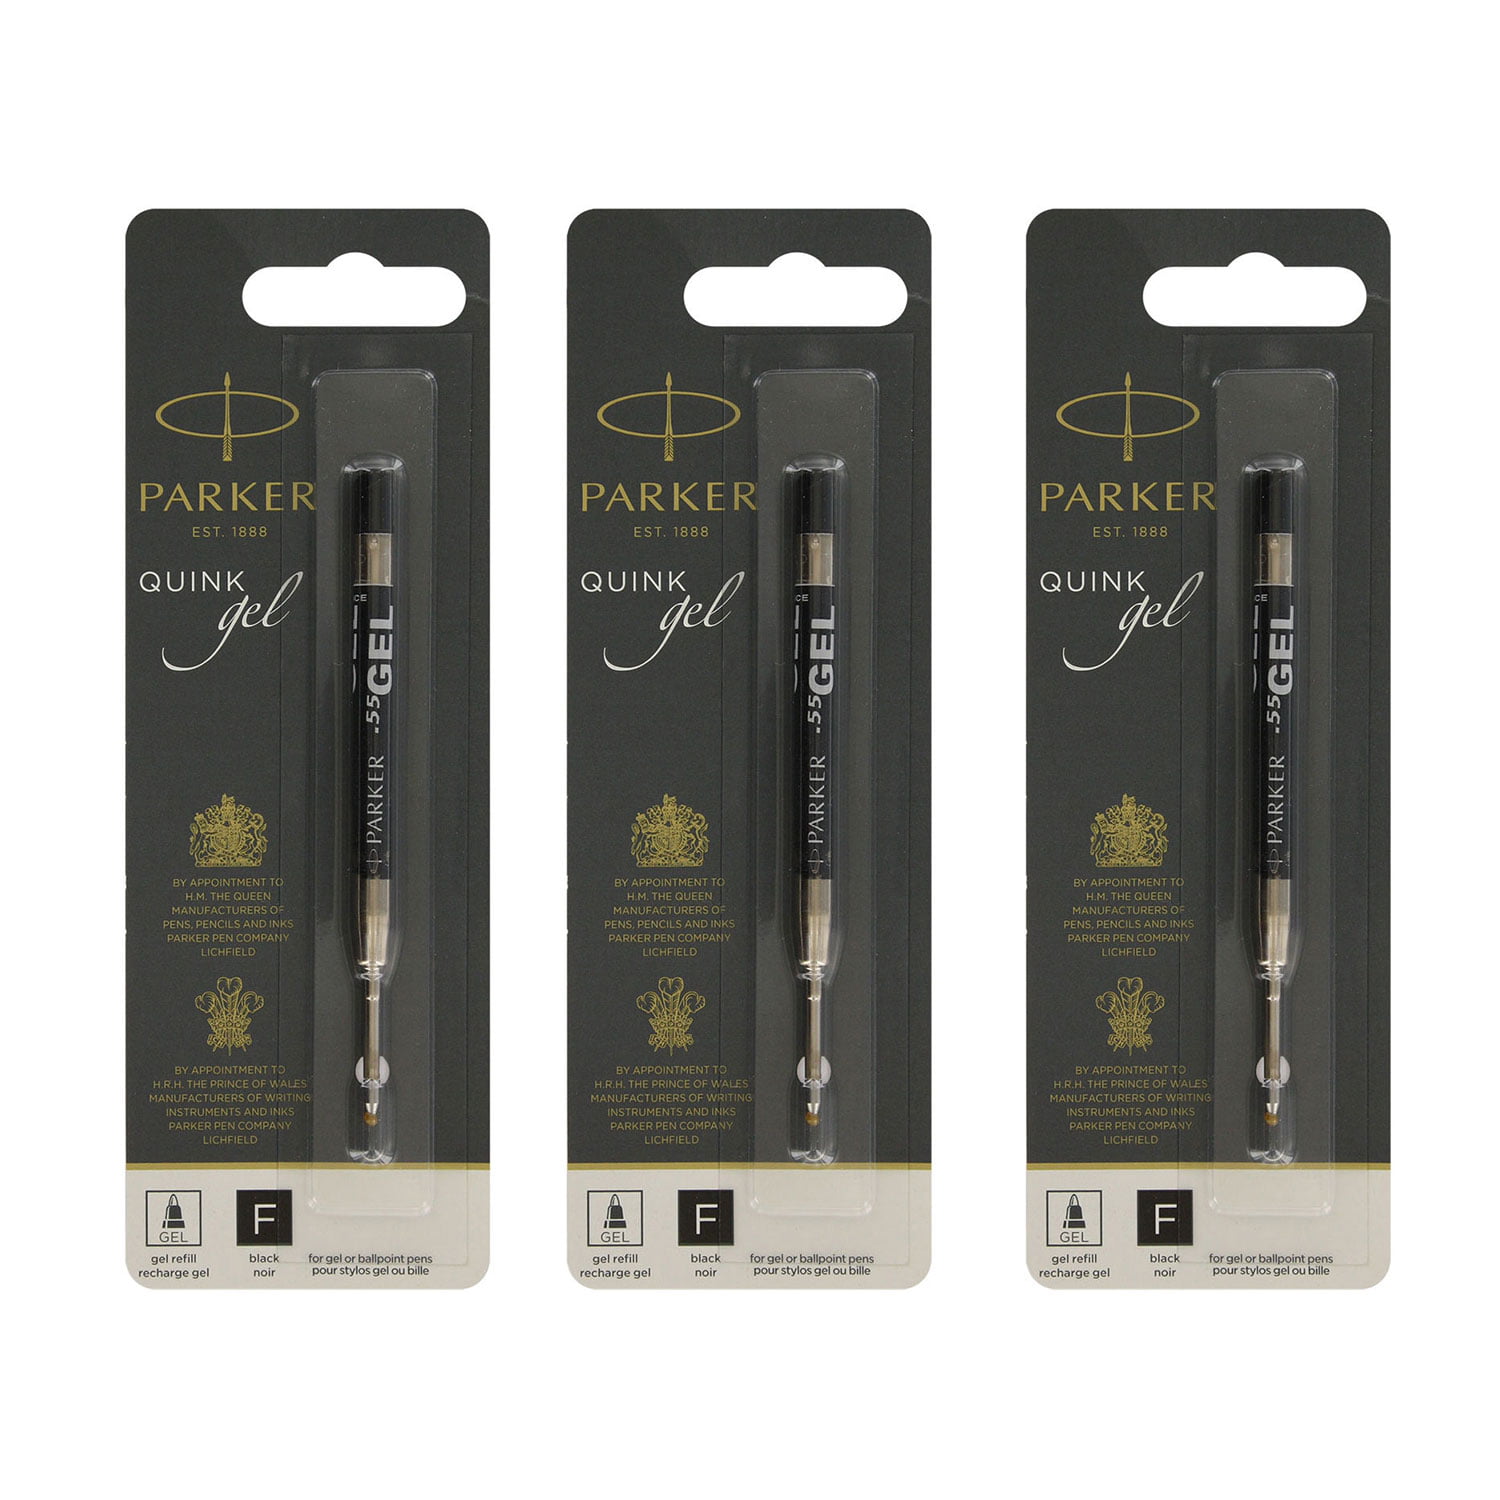 Details about   5 X Parker Quink Roller Ball Pen Refills Re Fill Black Ink Ultra Fine UF NIB New